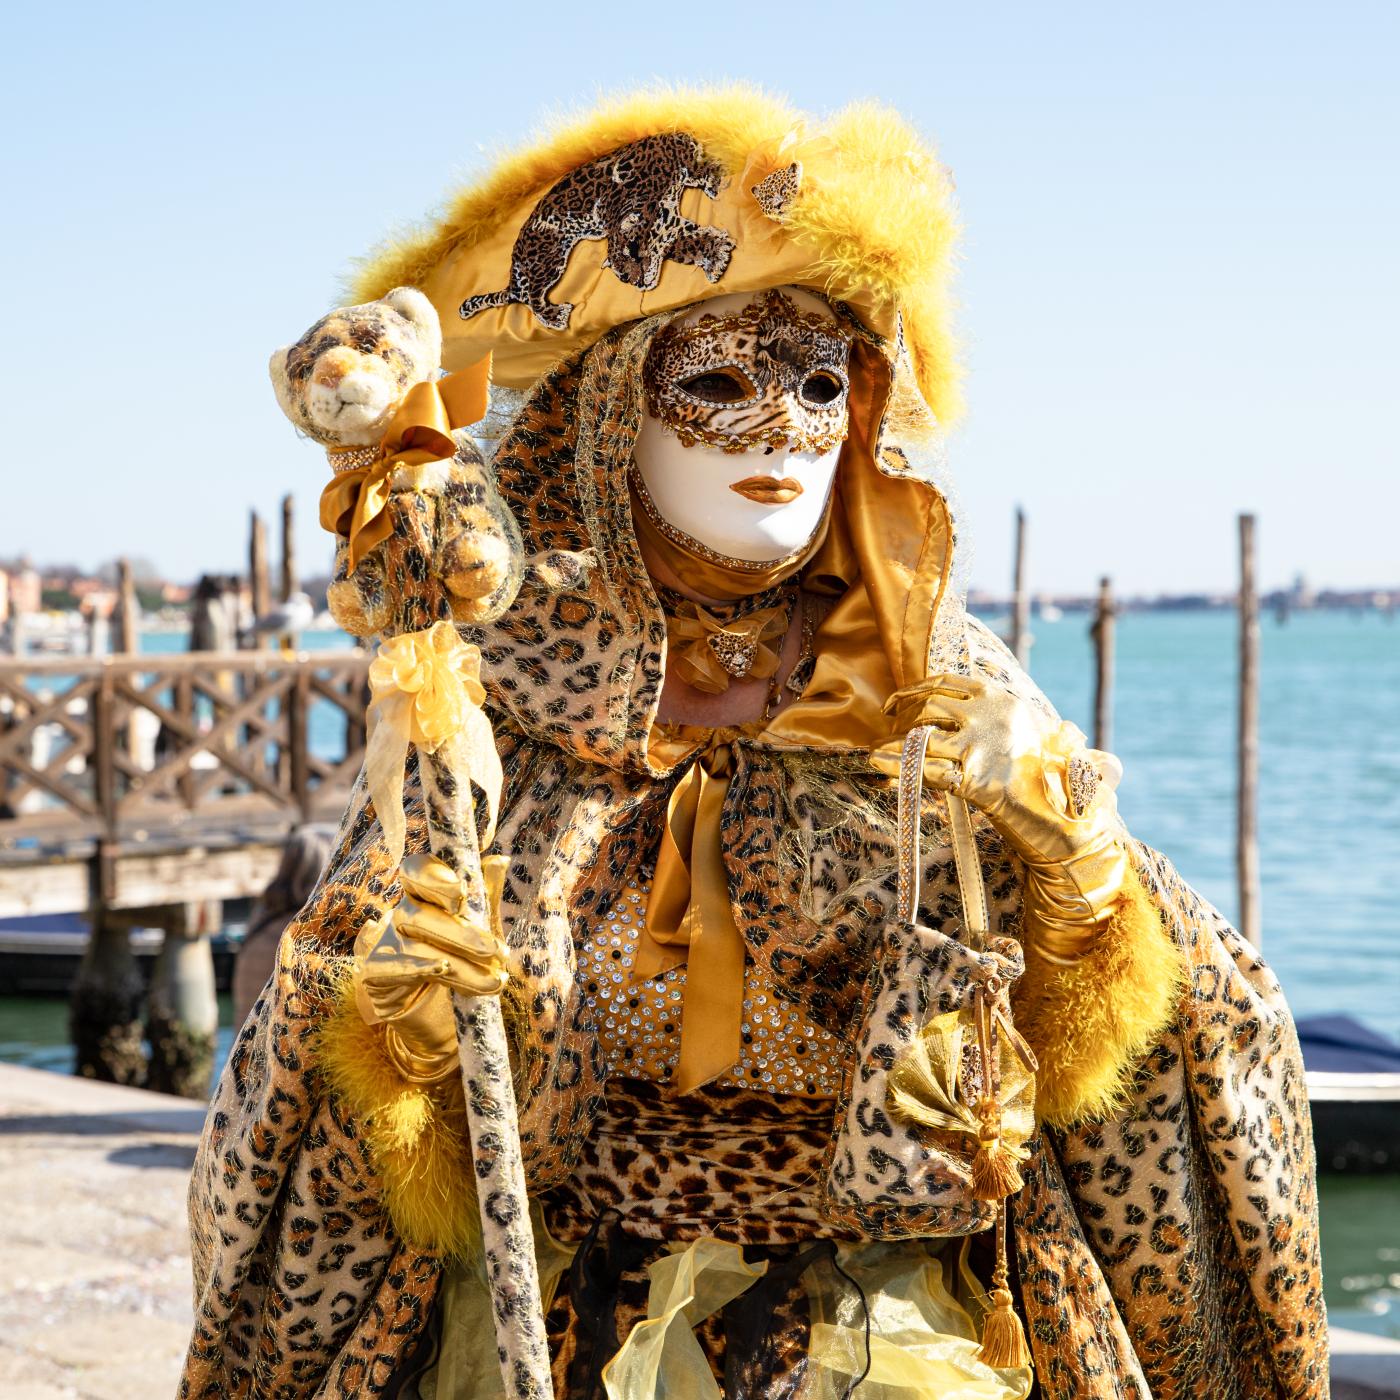 La Vita a Venezia